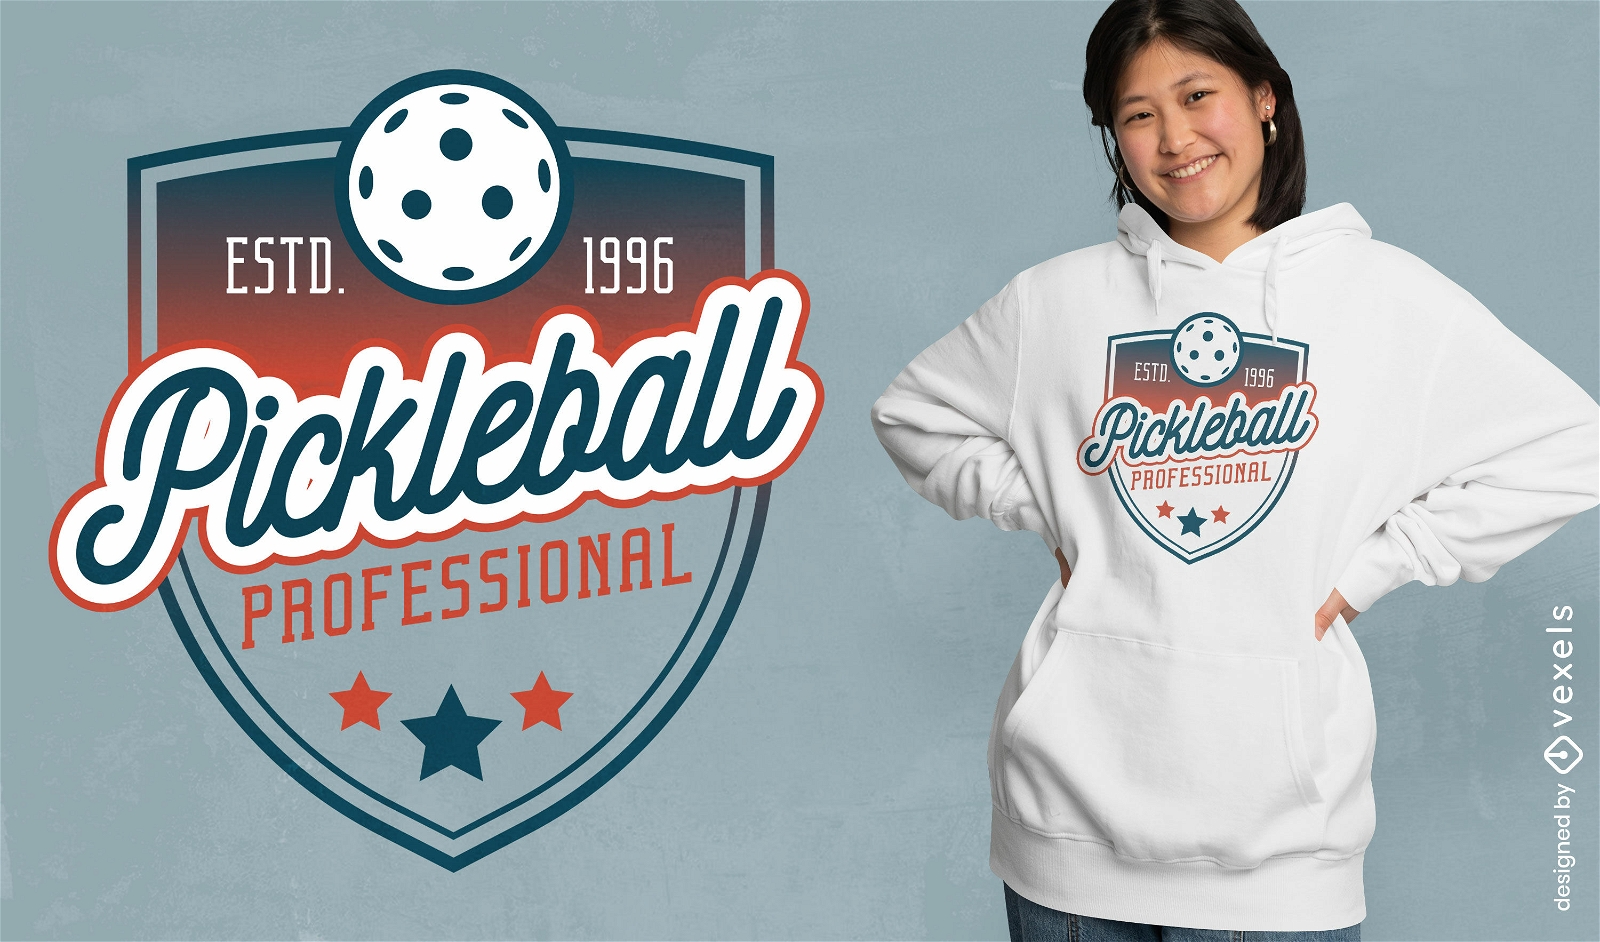 Pickball professional t-shirt design